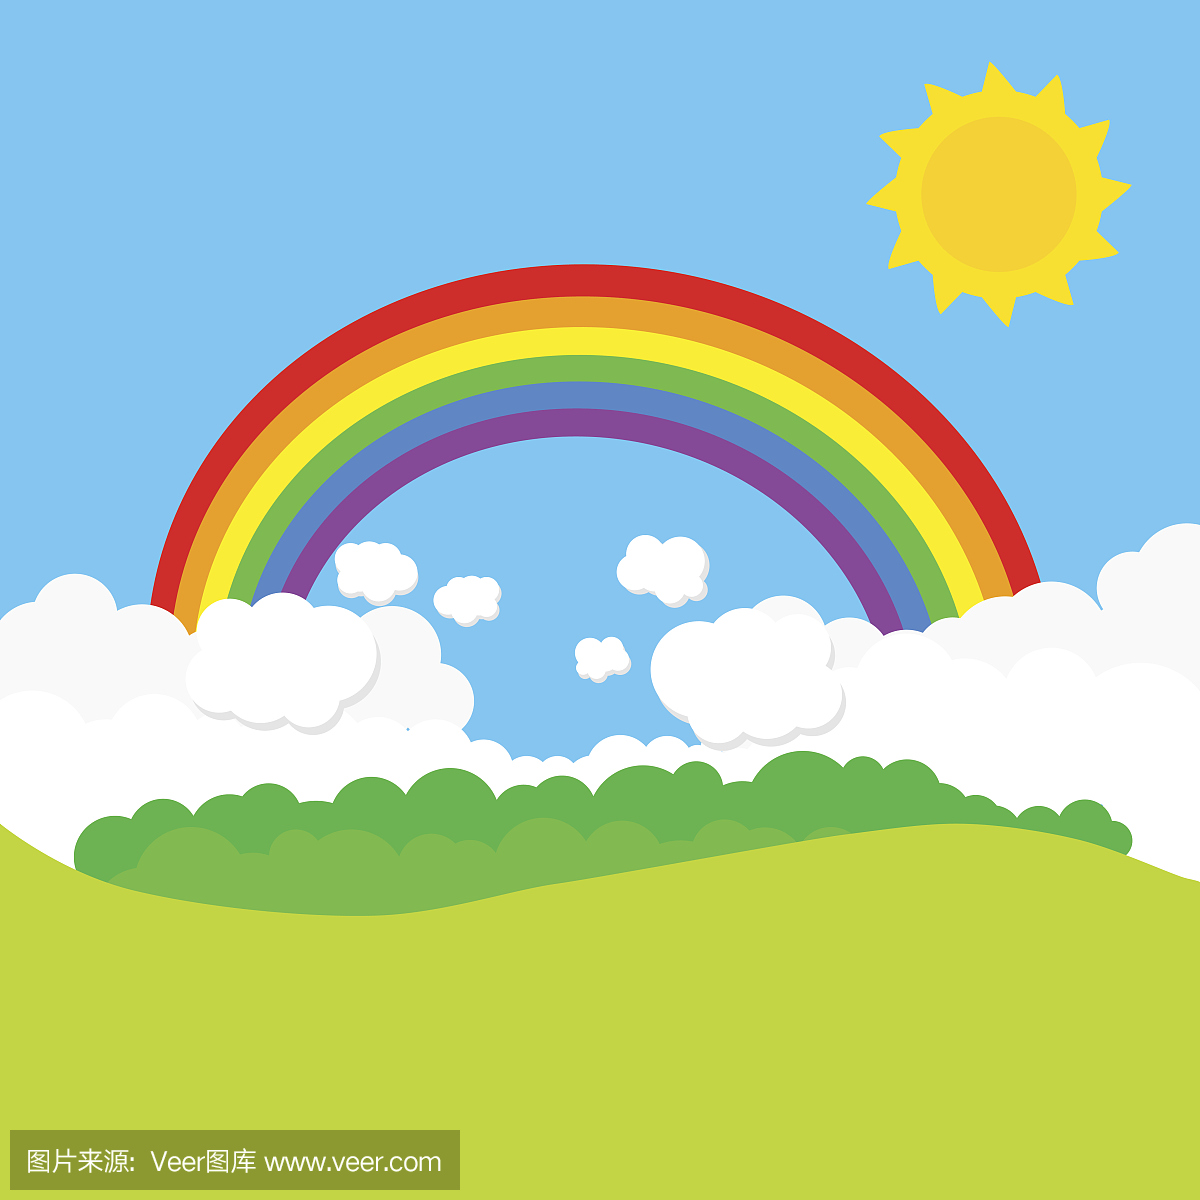 Landscape with rainbow and sun. Vector illustra